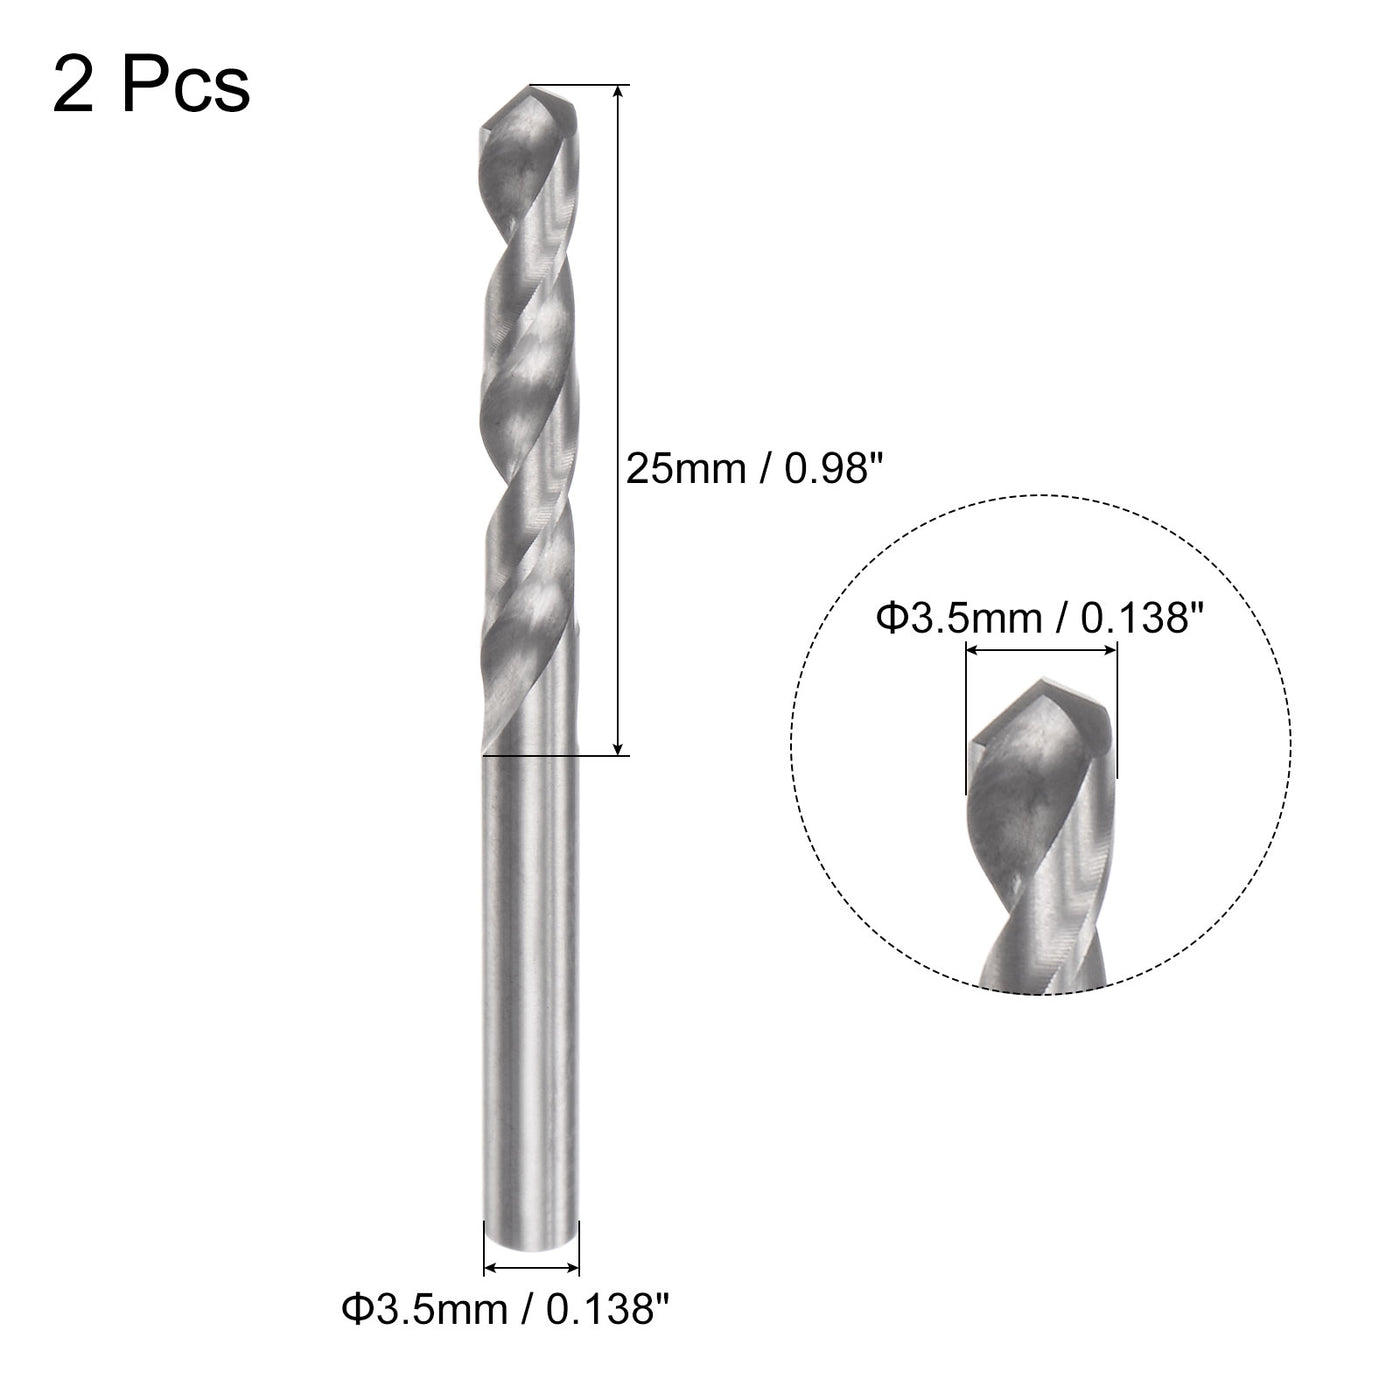 uxcell Uxcell 3.5mm C2/K20 Tungsten Carbide Straight Shank Spiral Flutes Twist Drill Bit 2pcs